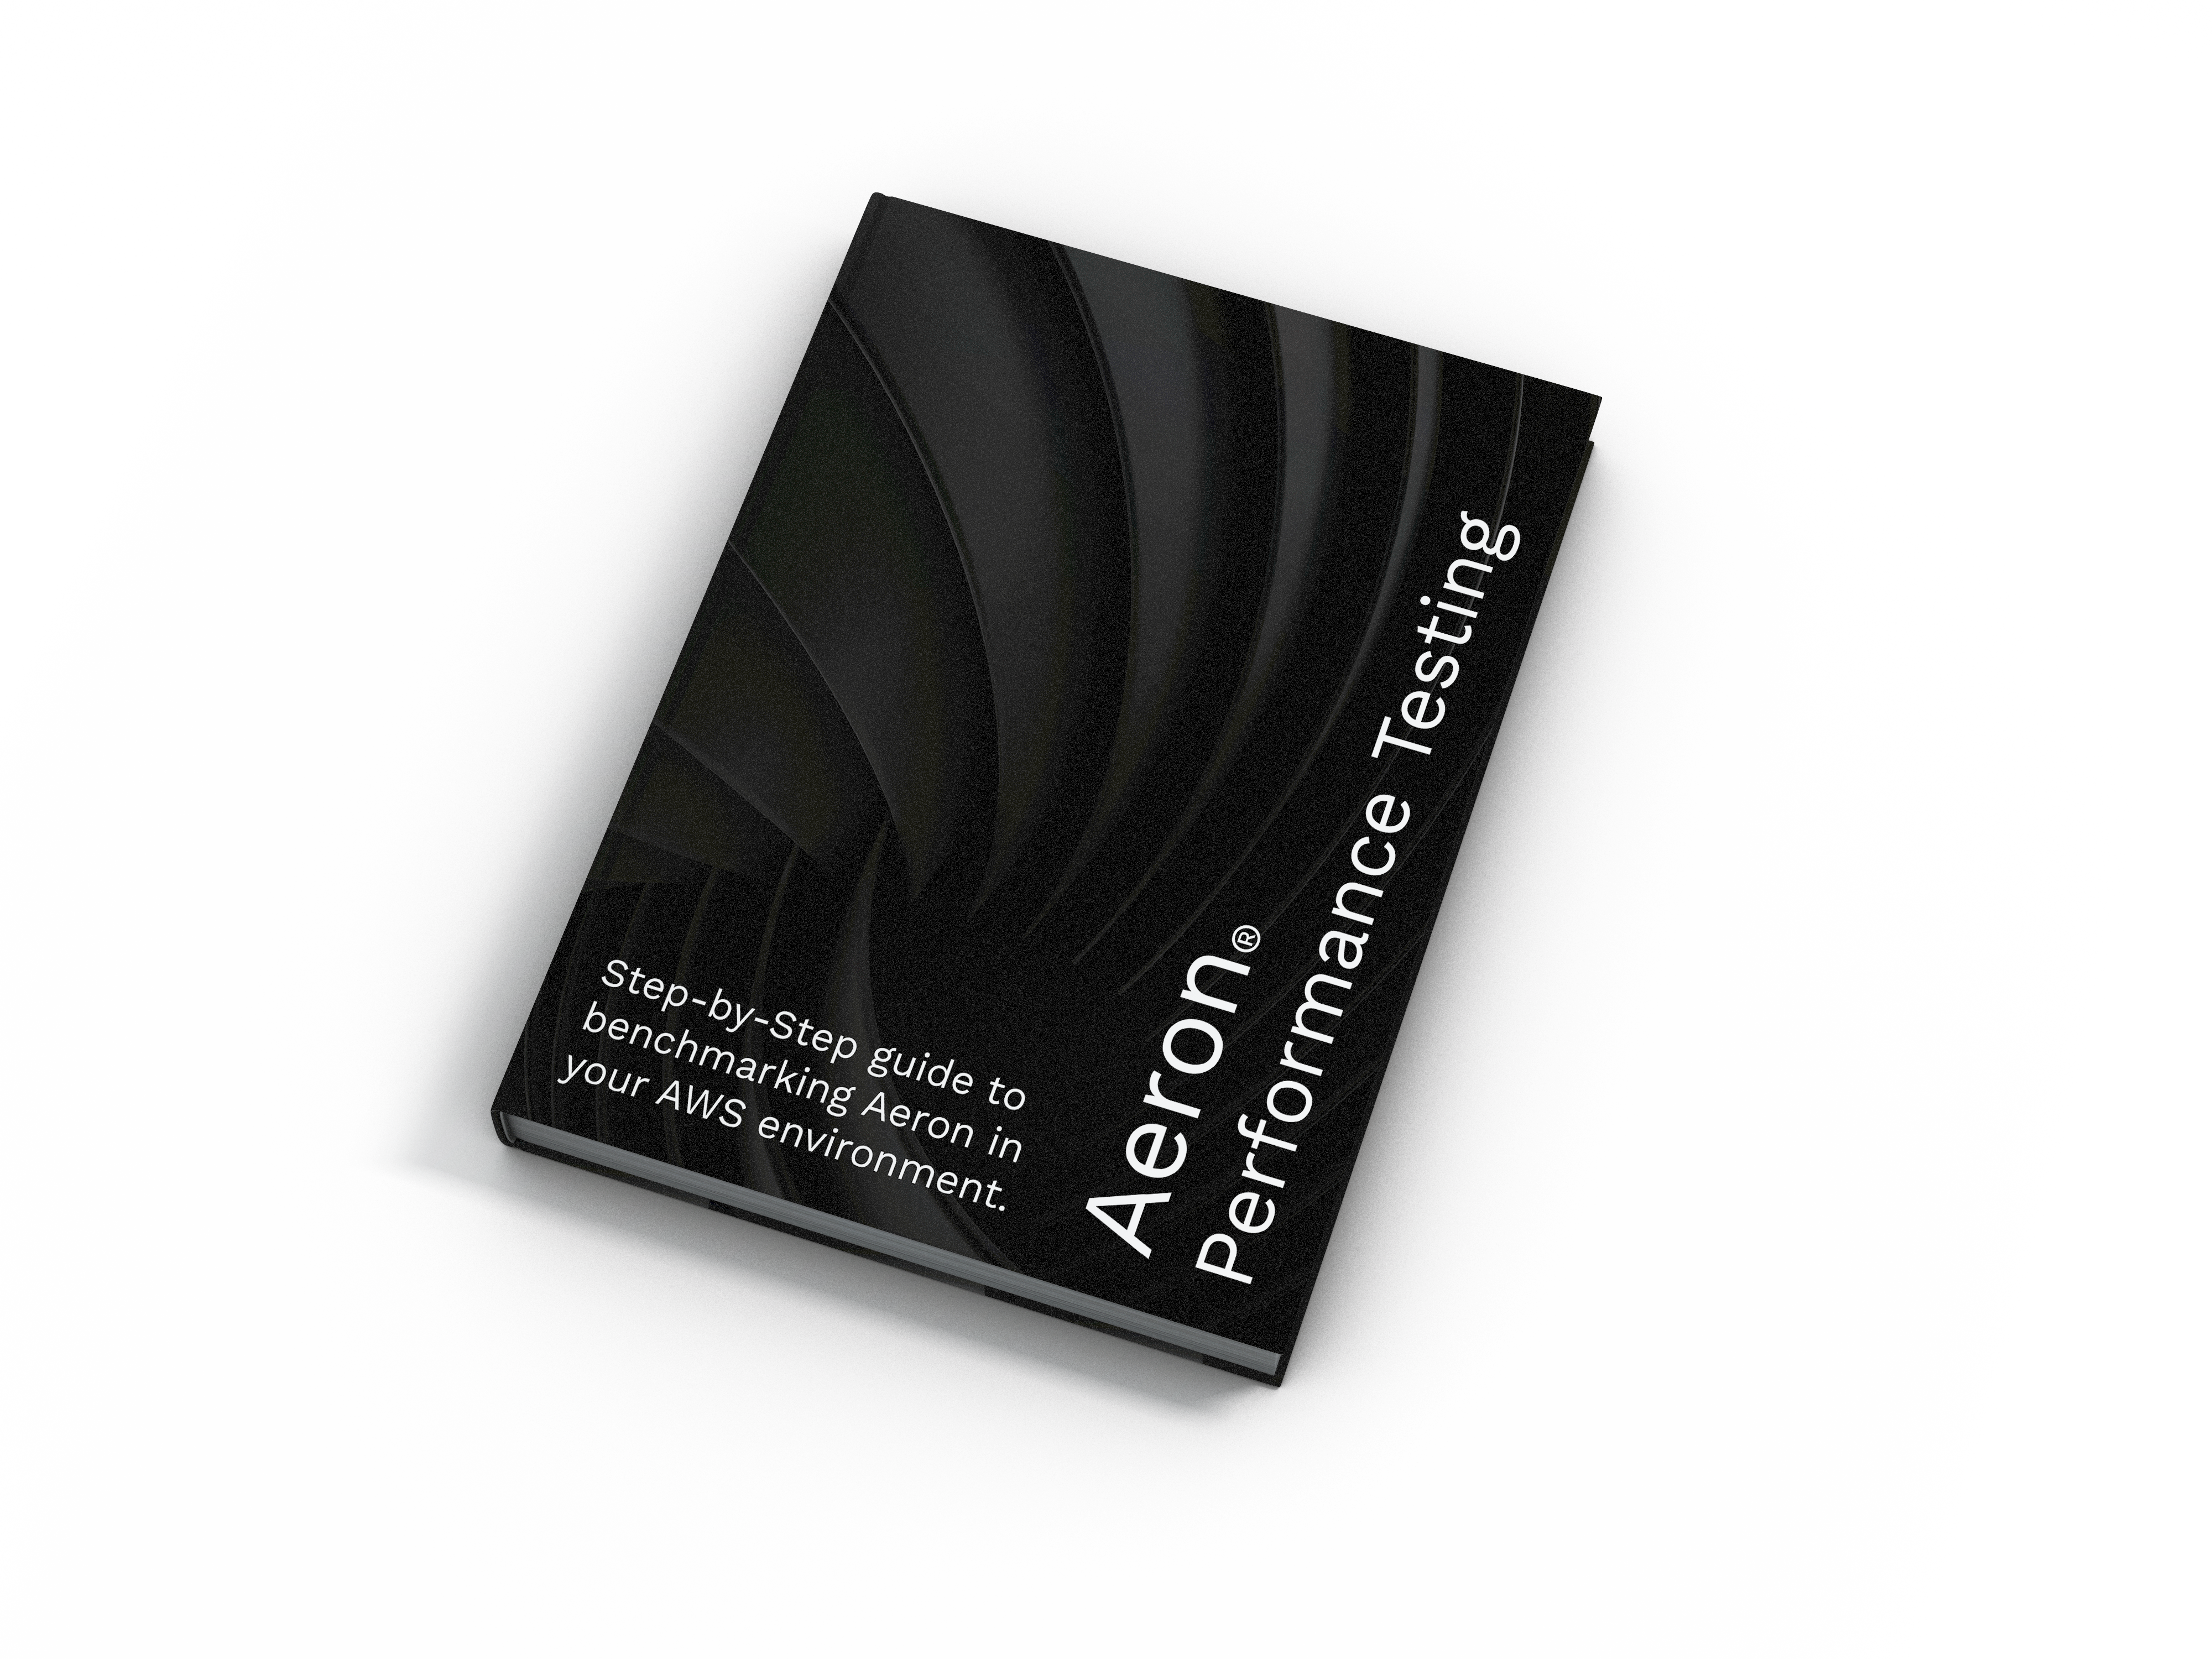 Aeron Performance Guide in AWS environment